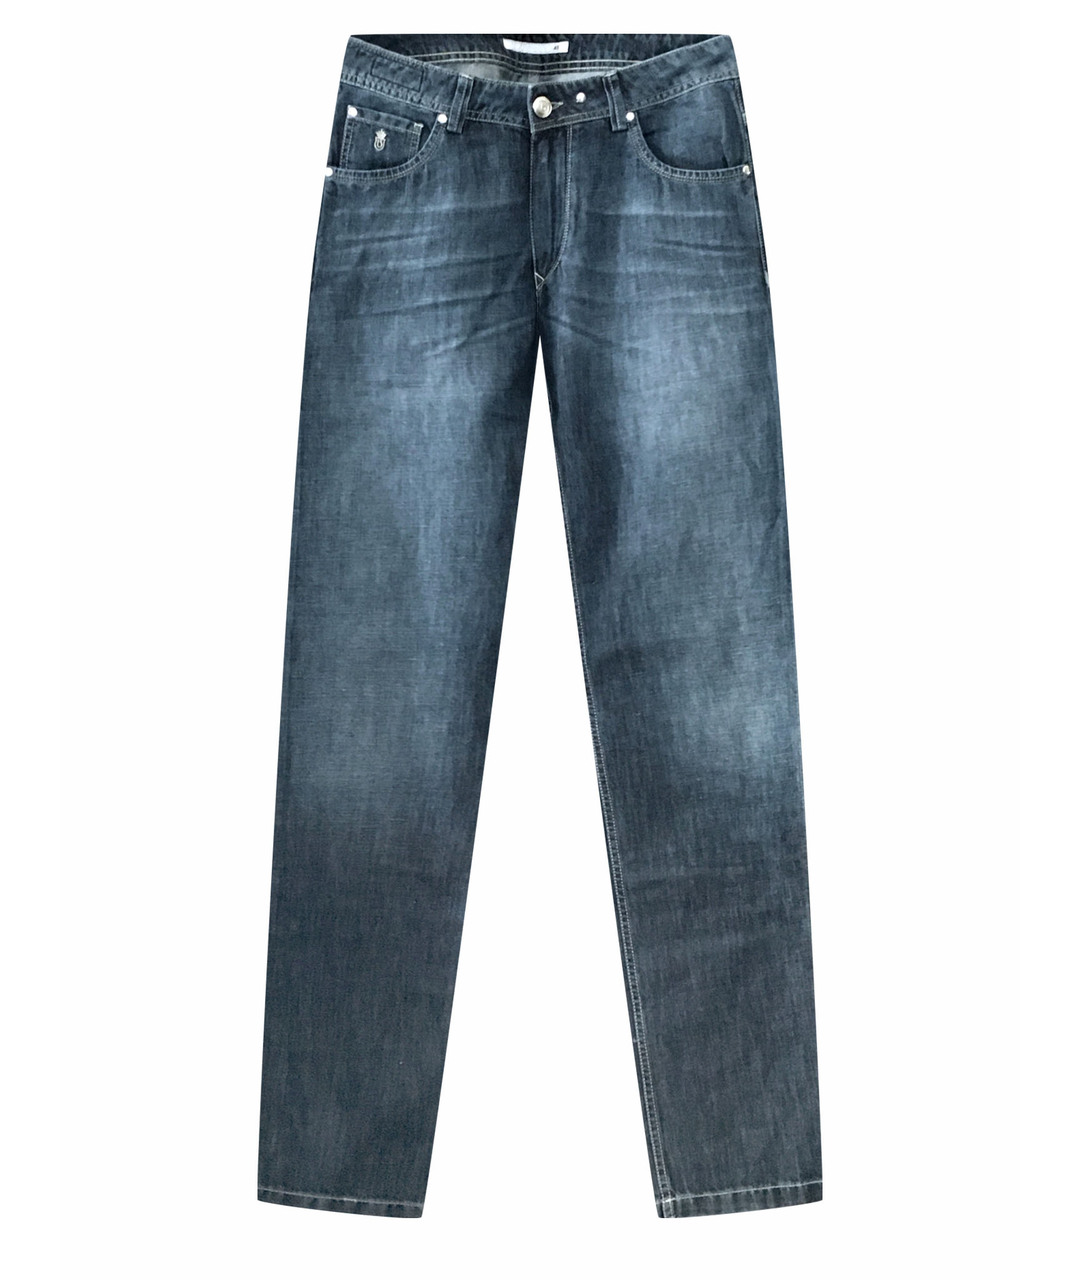 BILANCIONI Синие хлопко-леновые джинсы скинни, фото 1